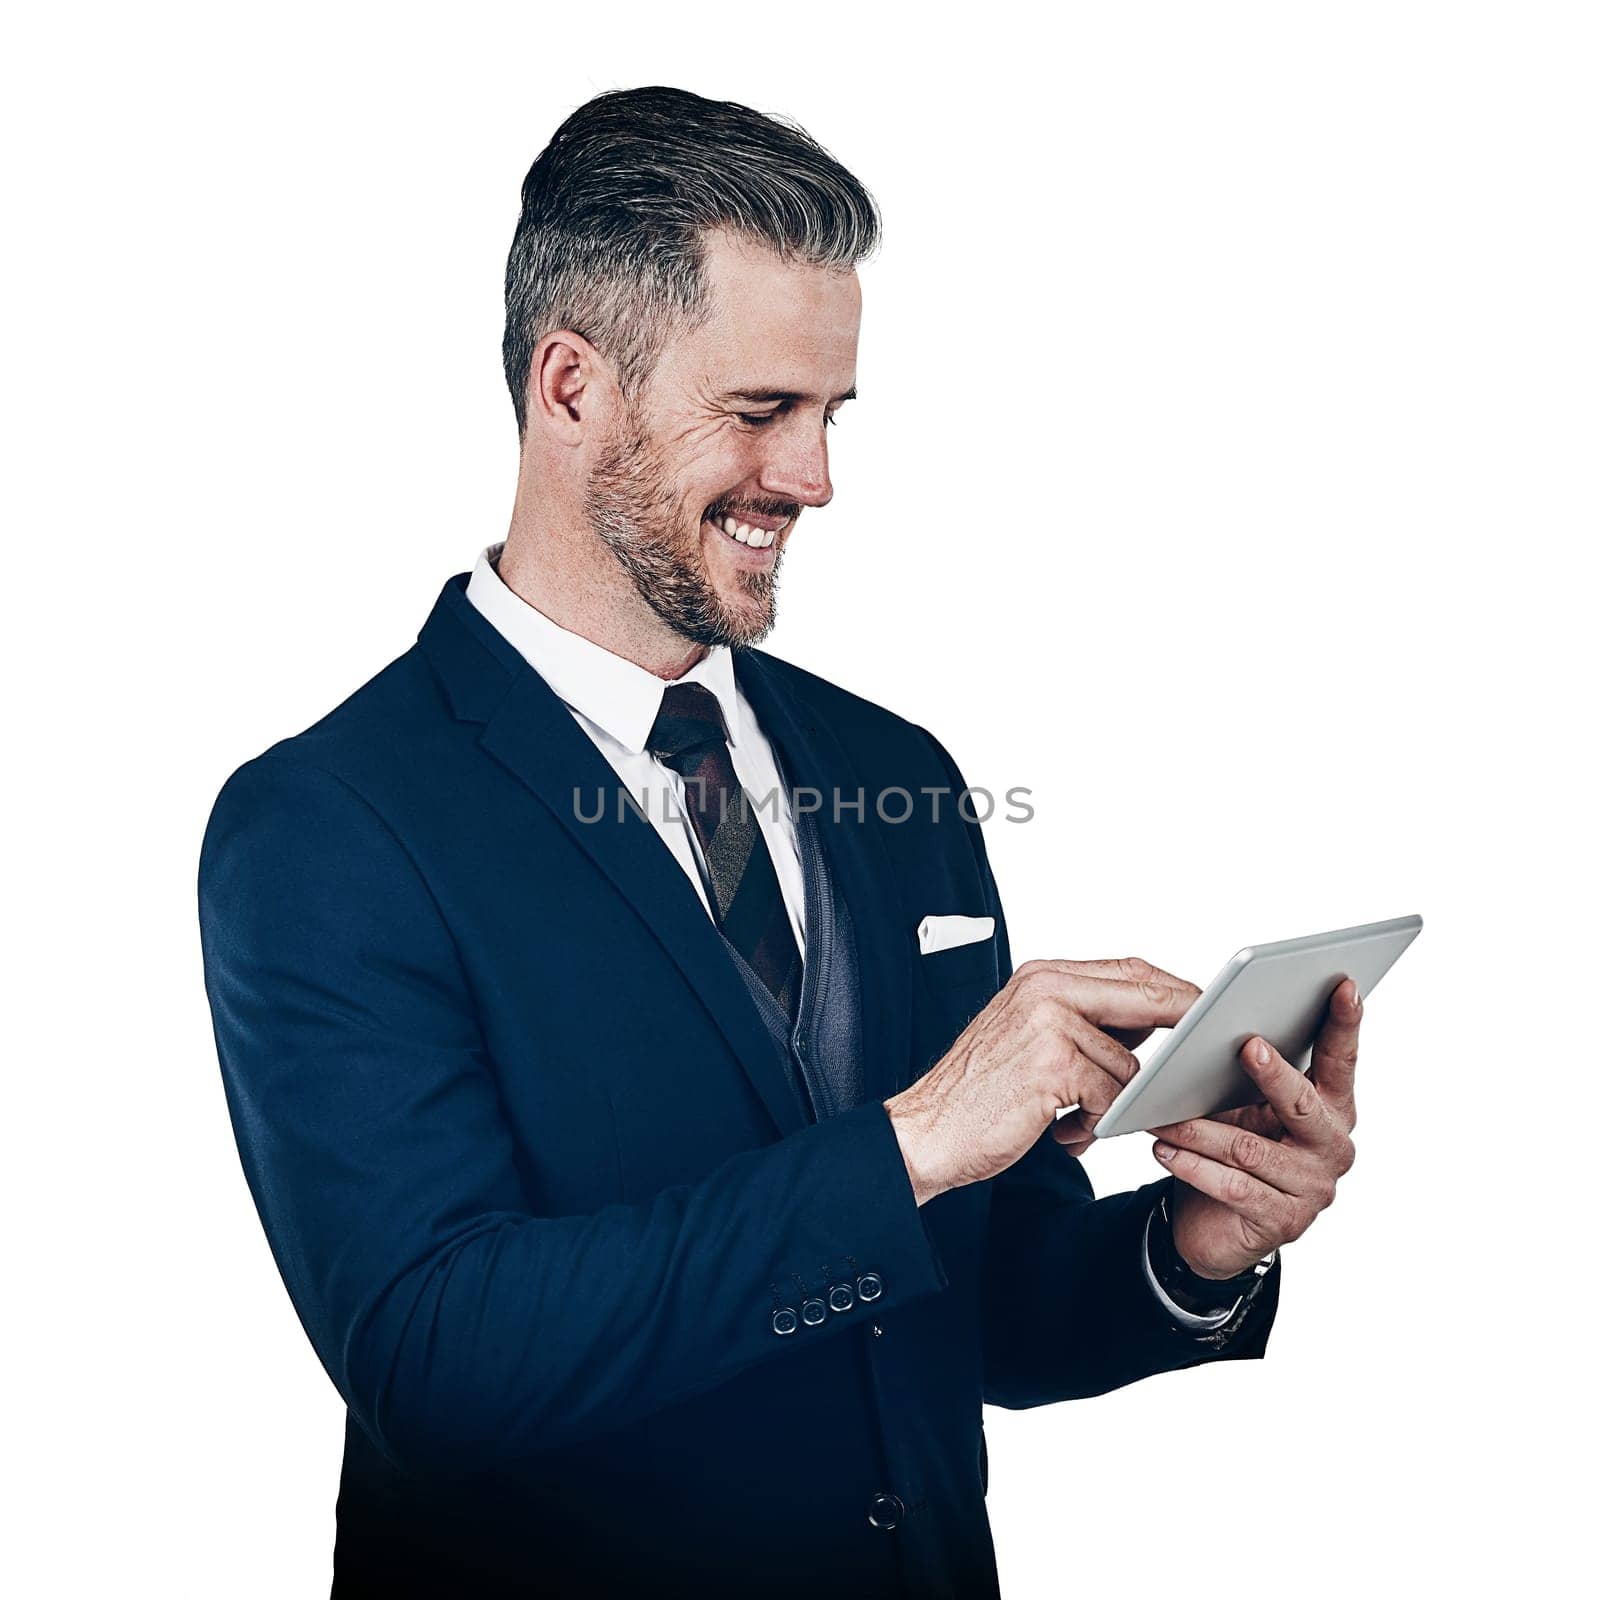 The informed entrepreneur is a successful entrepreneur. Studio shot of a businessman using a digital tablet against a white background